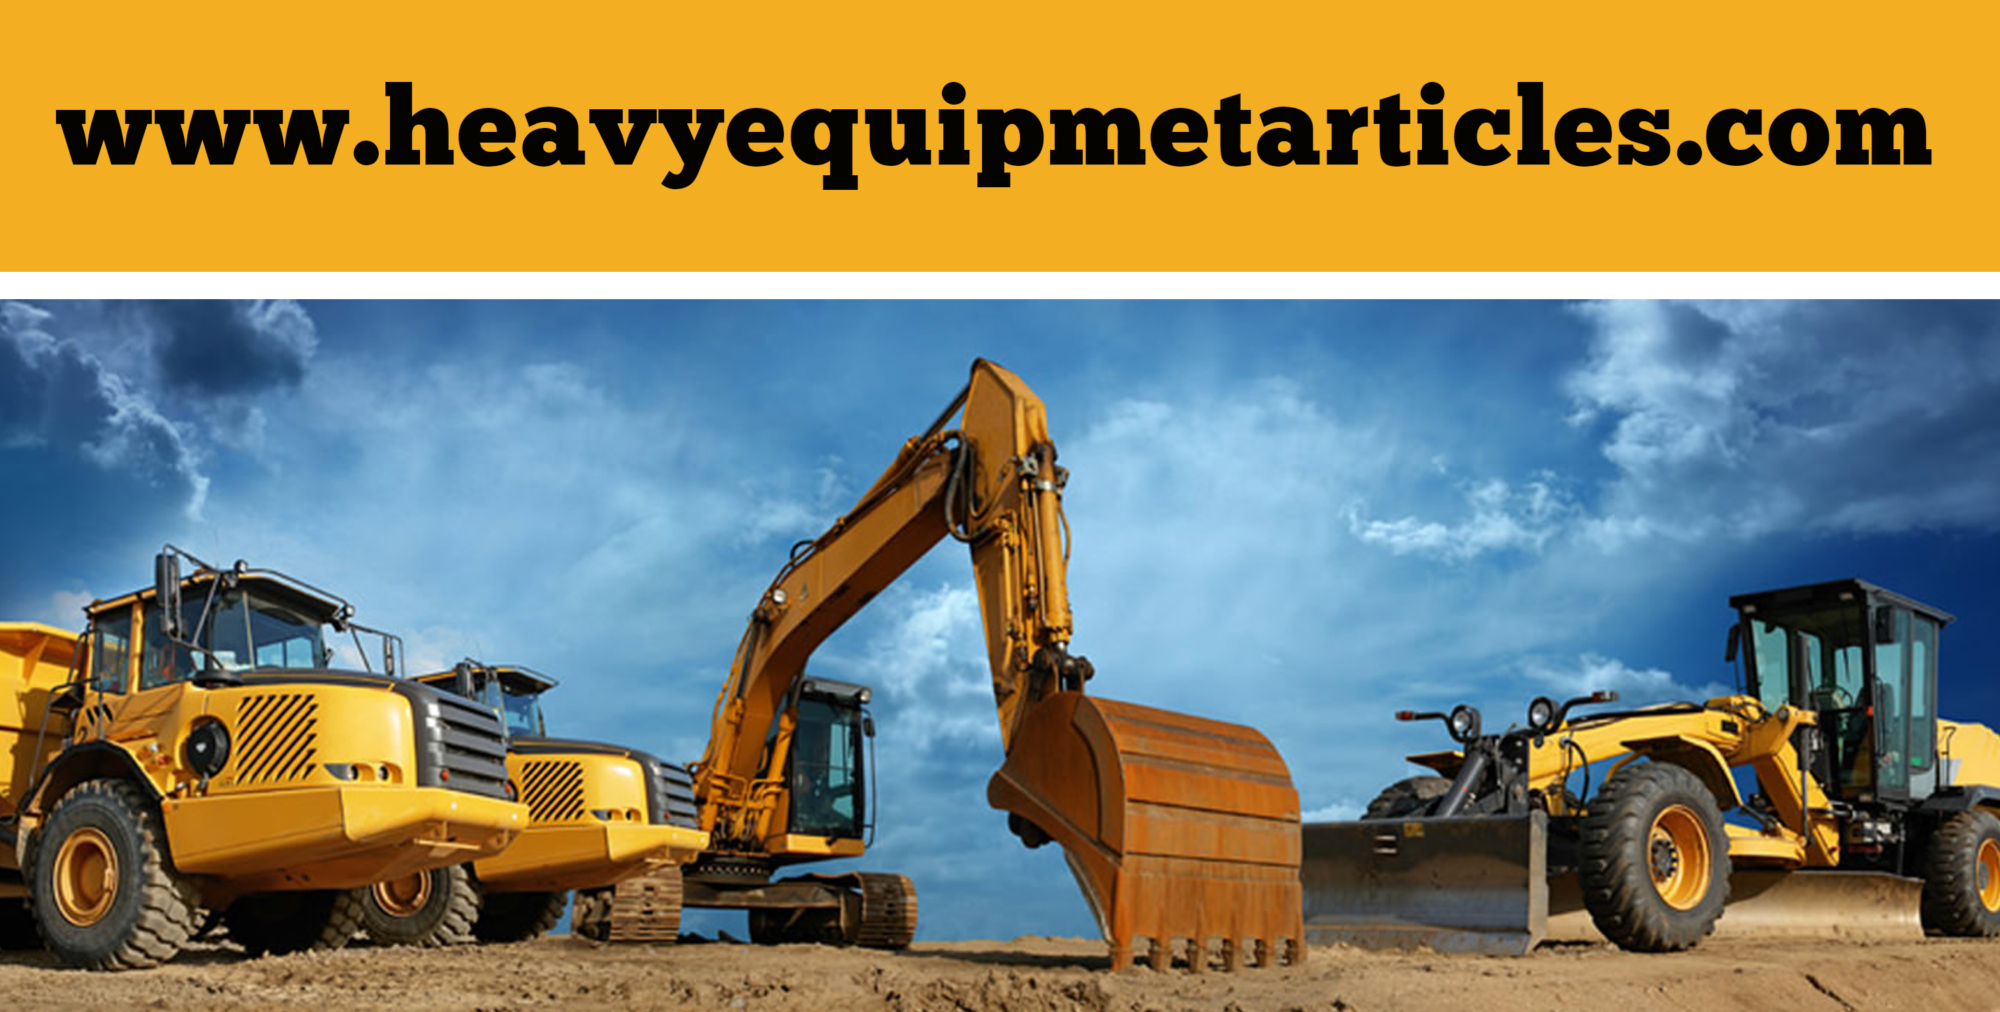 Heavy Equipment Articles